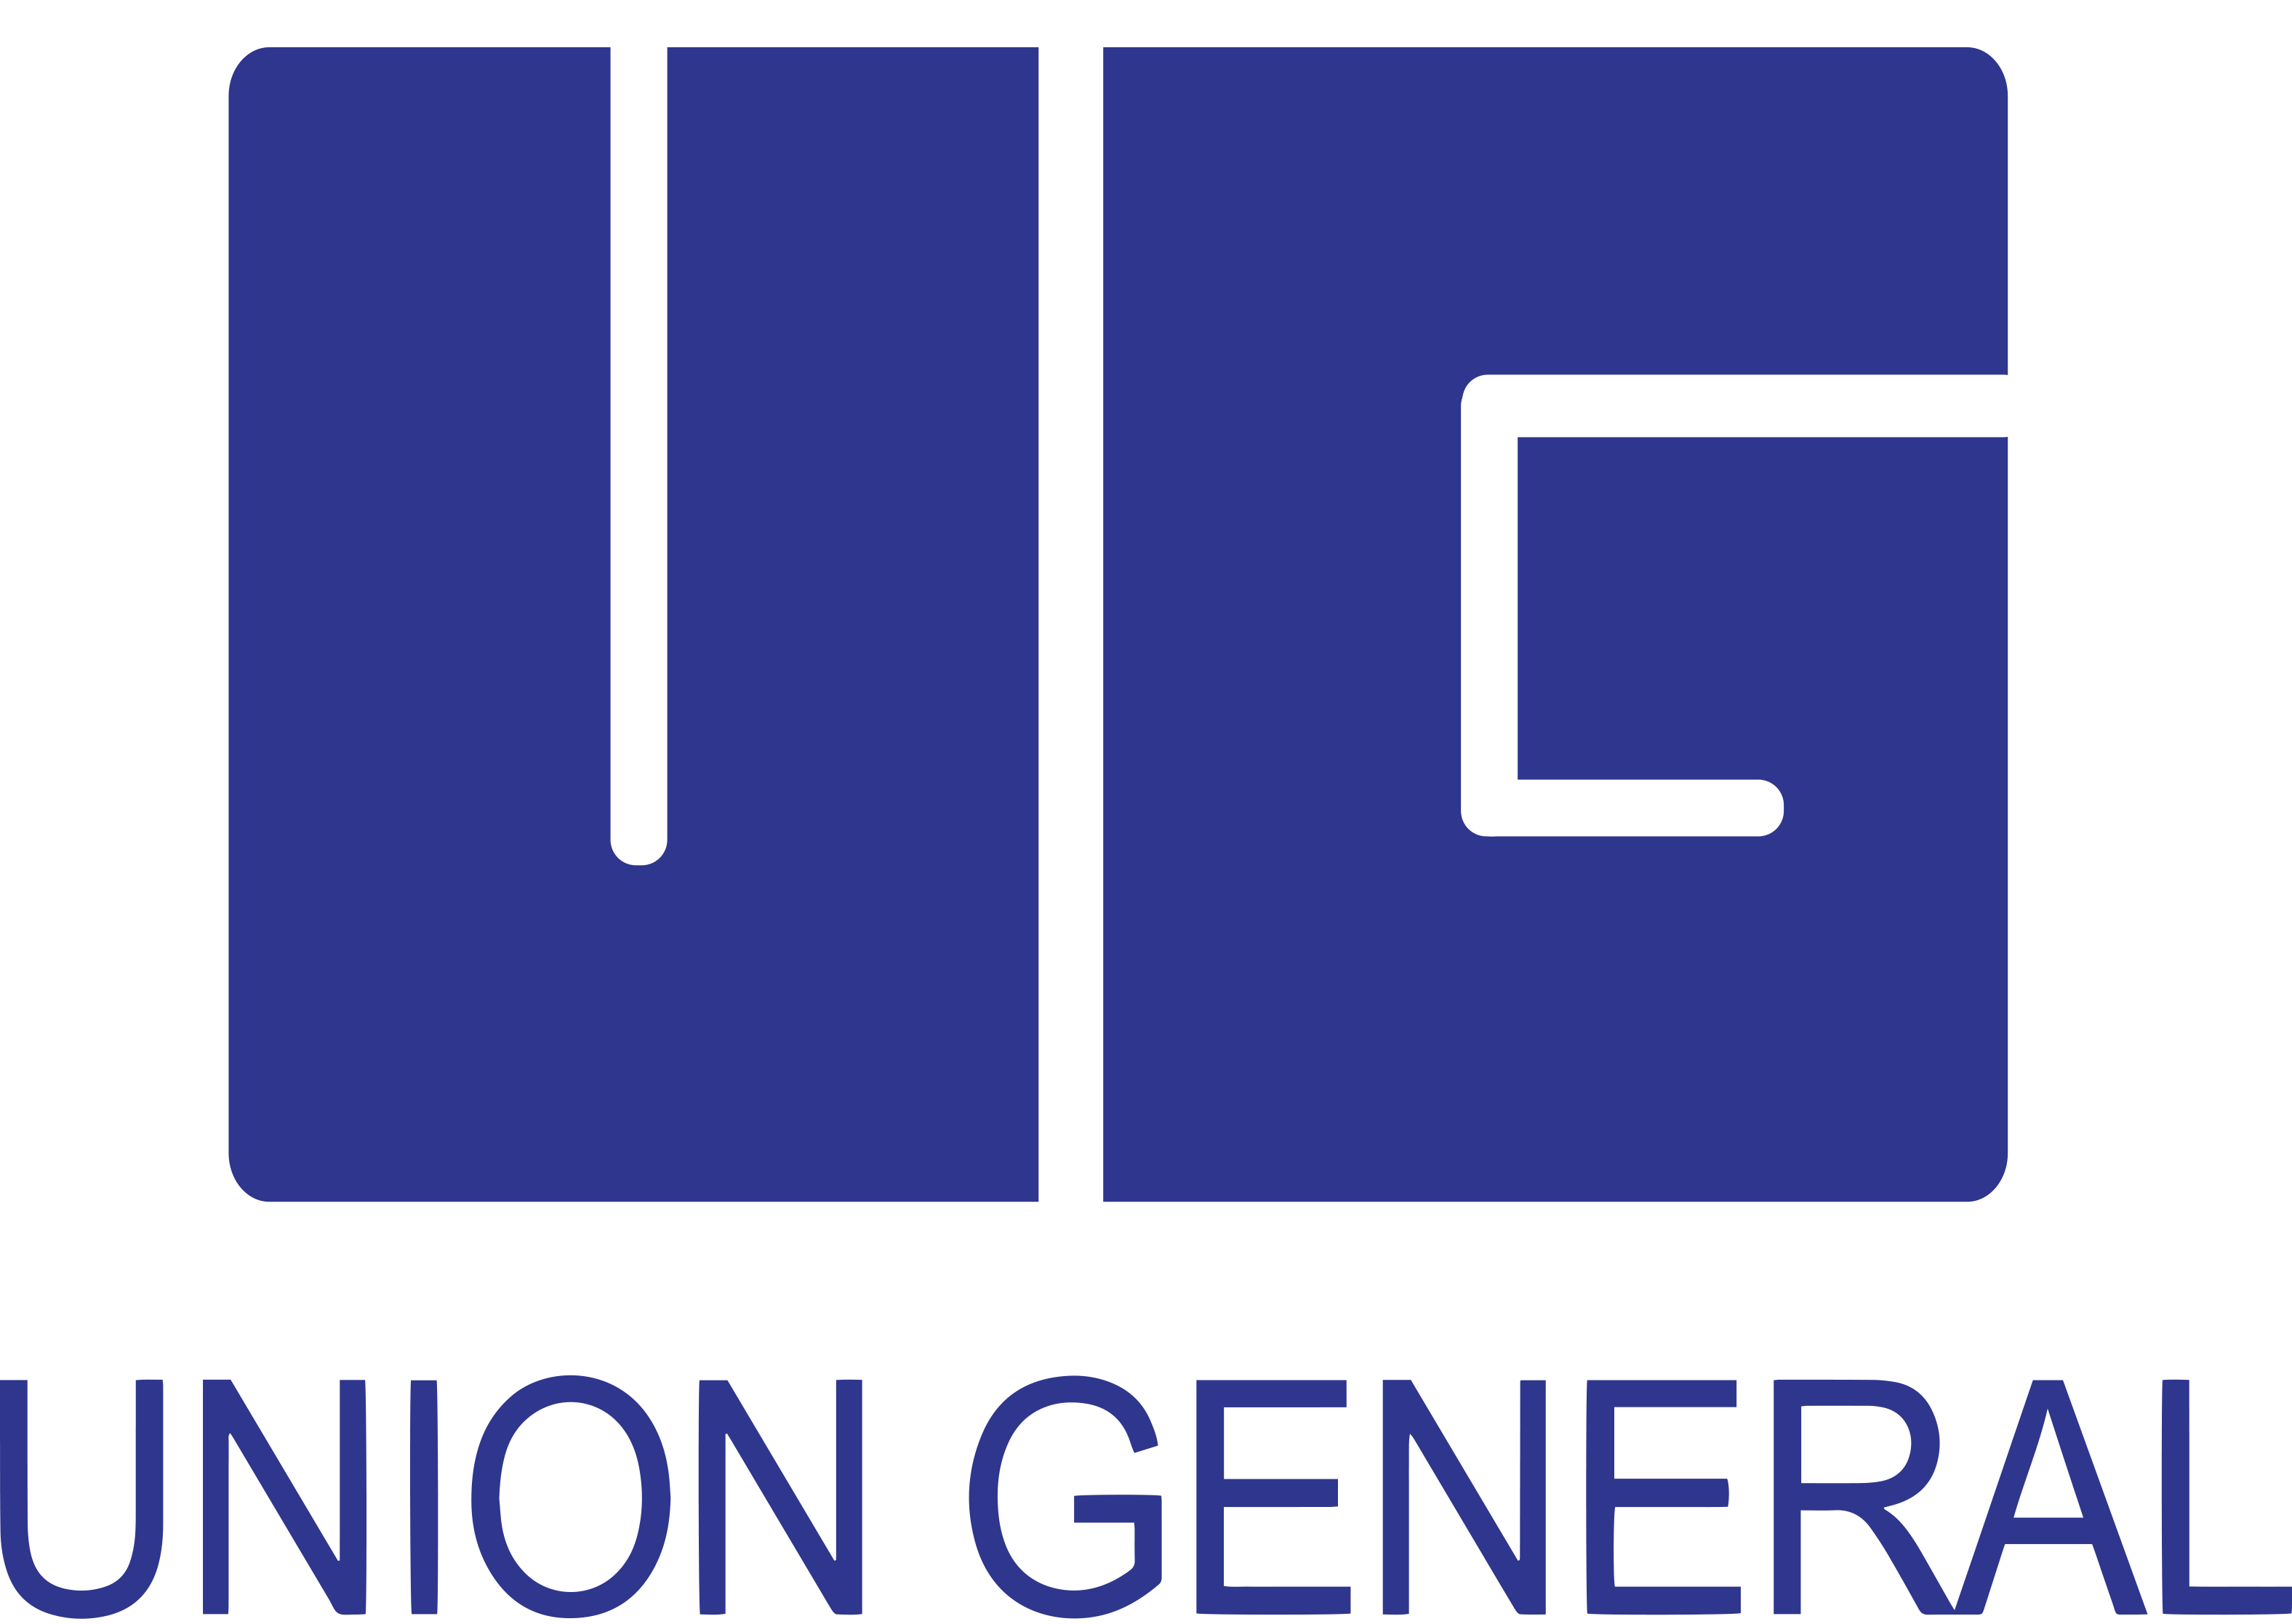 Union General Insurance Services, Inc. logo